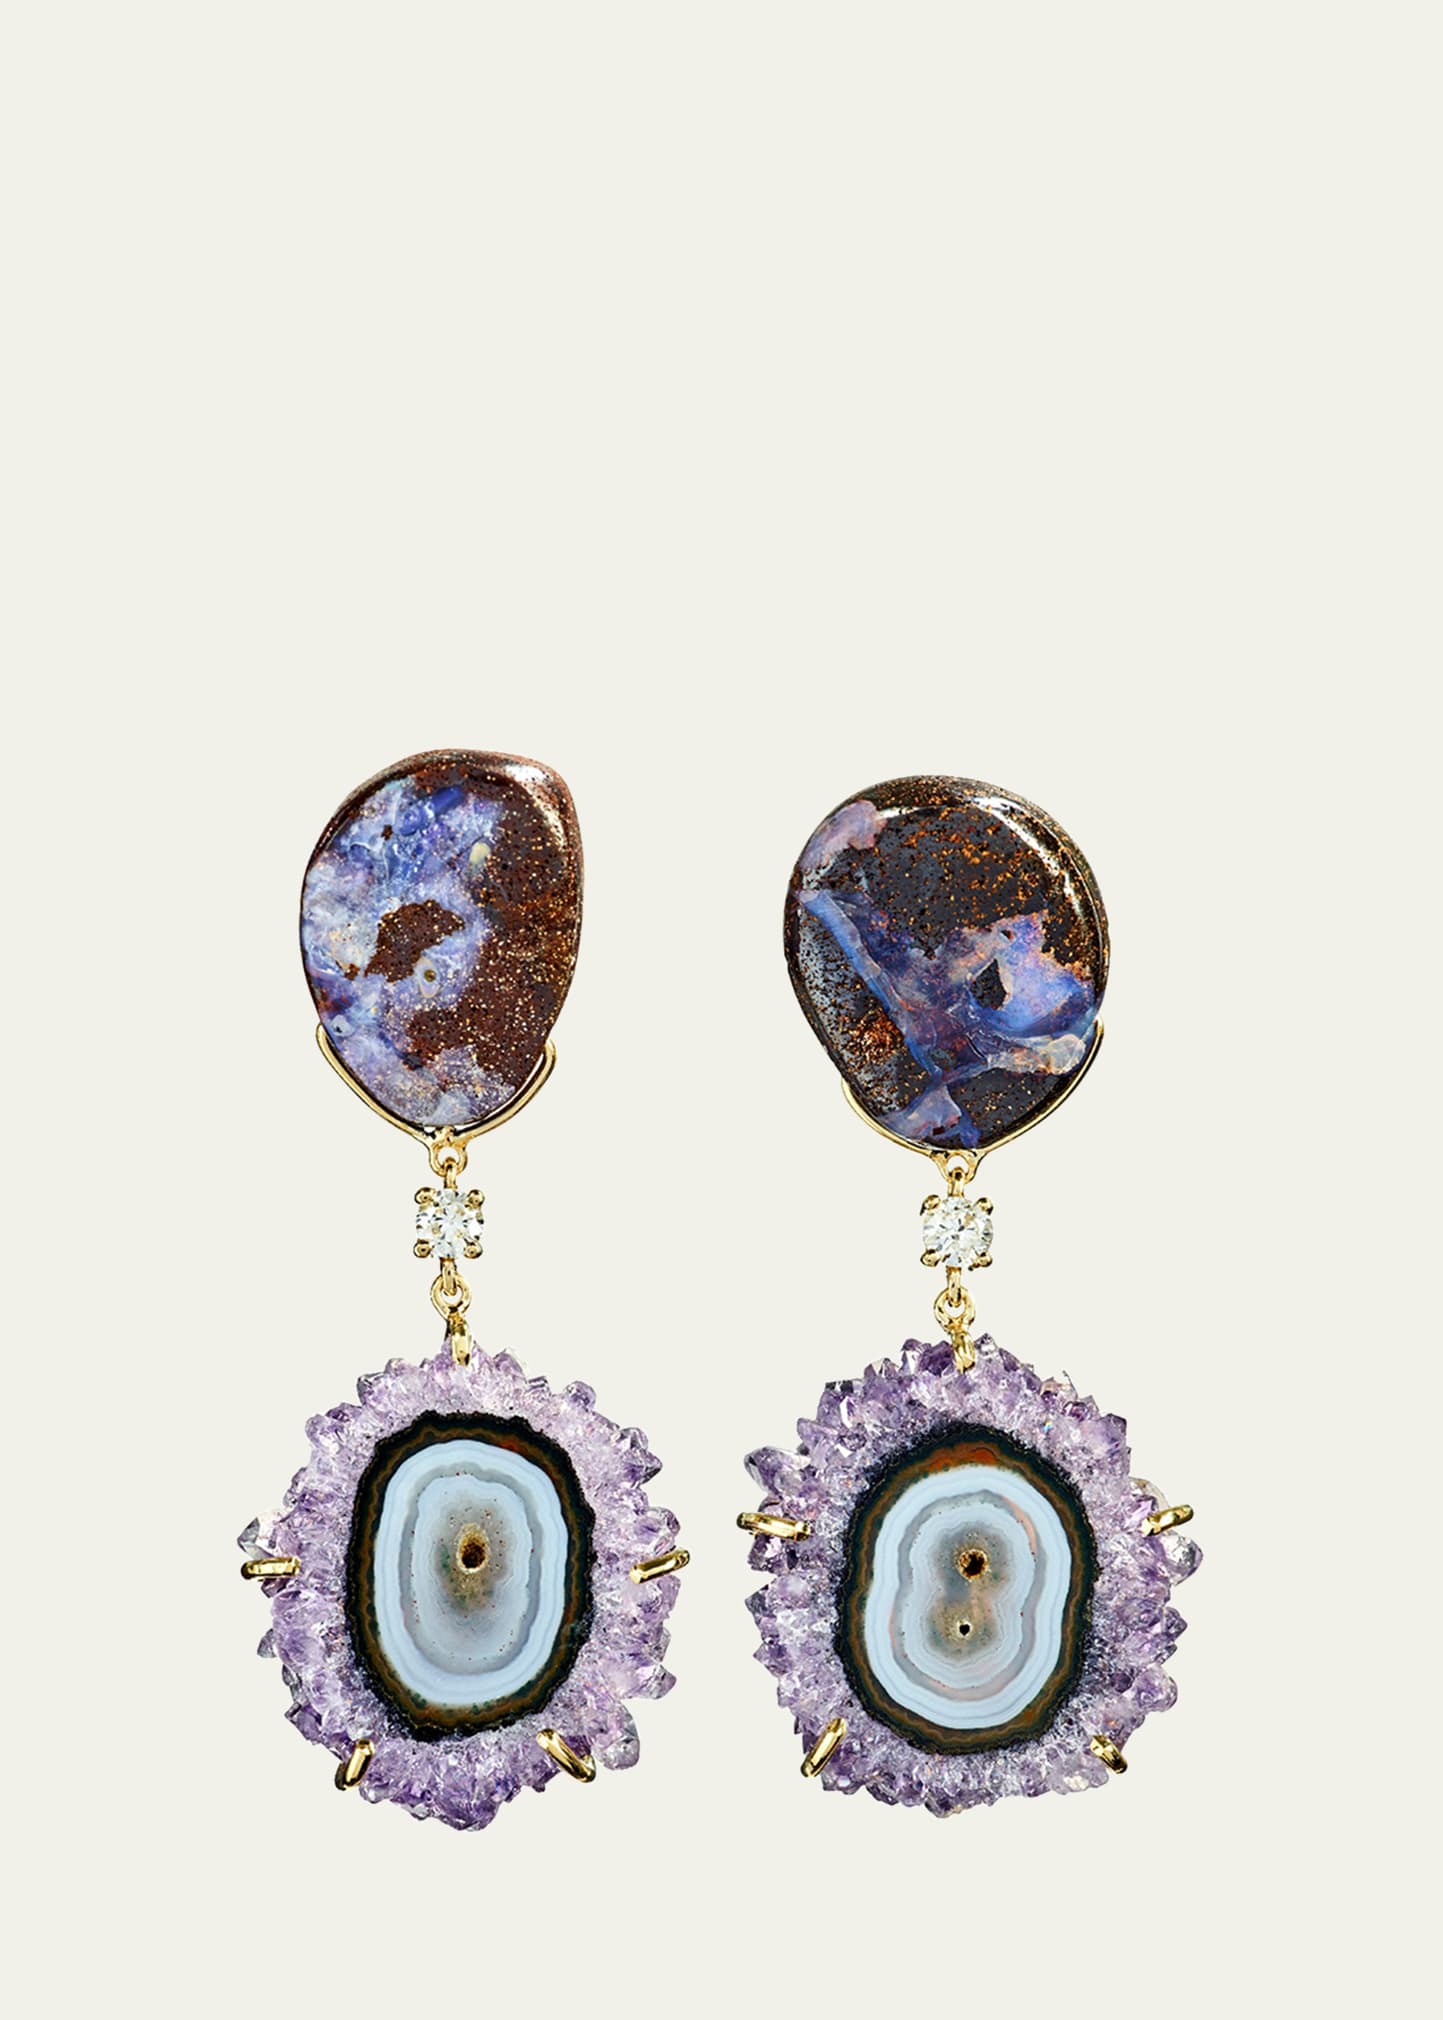 Jan Leslie 18k Bespoke 2-Tier One-of-a-Kind Luxury Earrings w/ Natural Boulder Opal, Stalactite & Diamonds